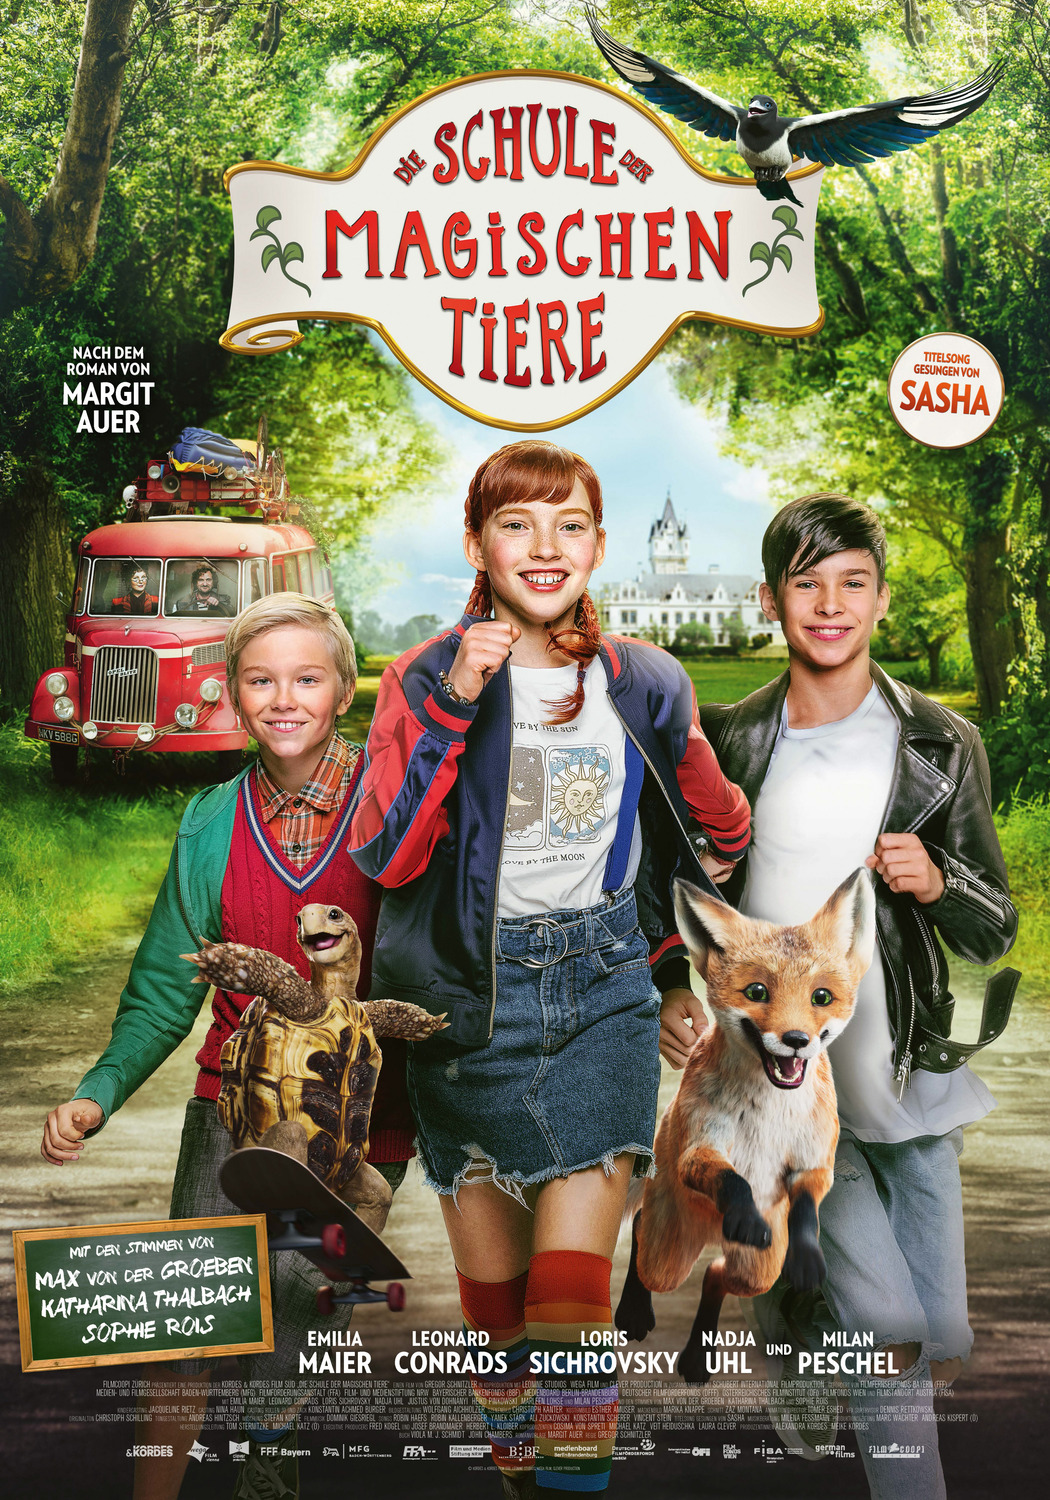 Extra Large Movie Poster Image for Die Schule der magischen Tiere (#1 of 2)